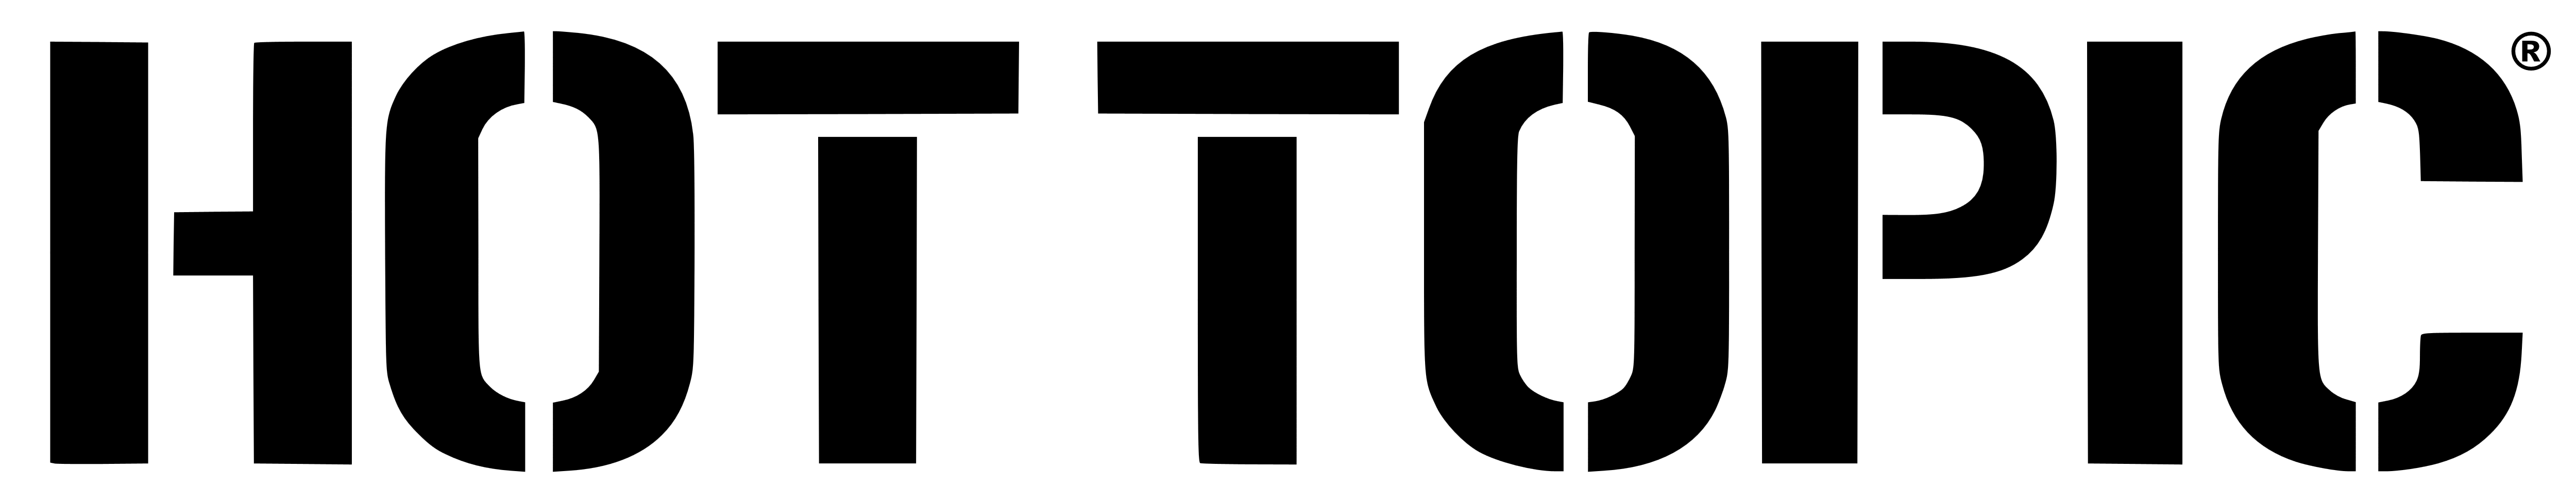 Topic Logo - Hot Topic